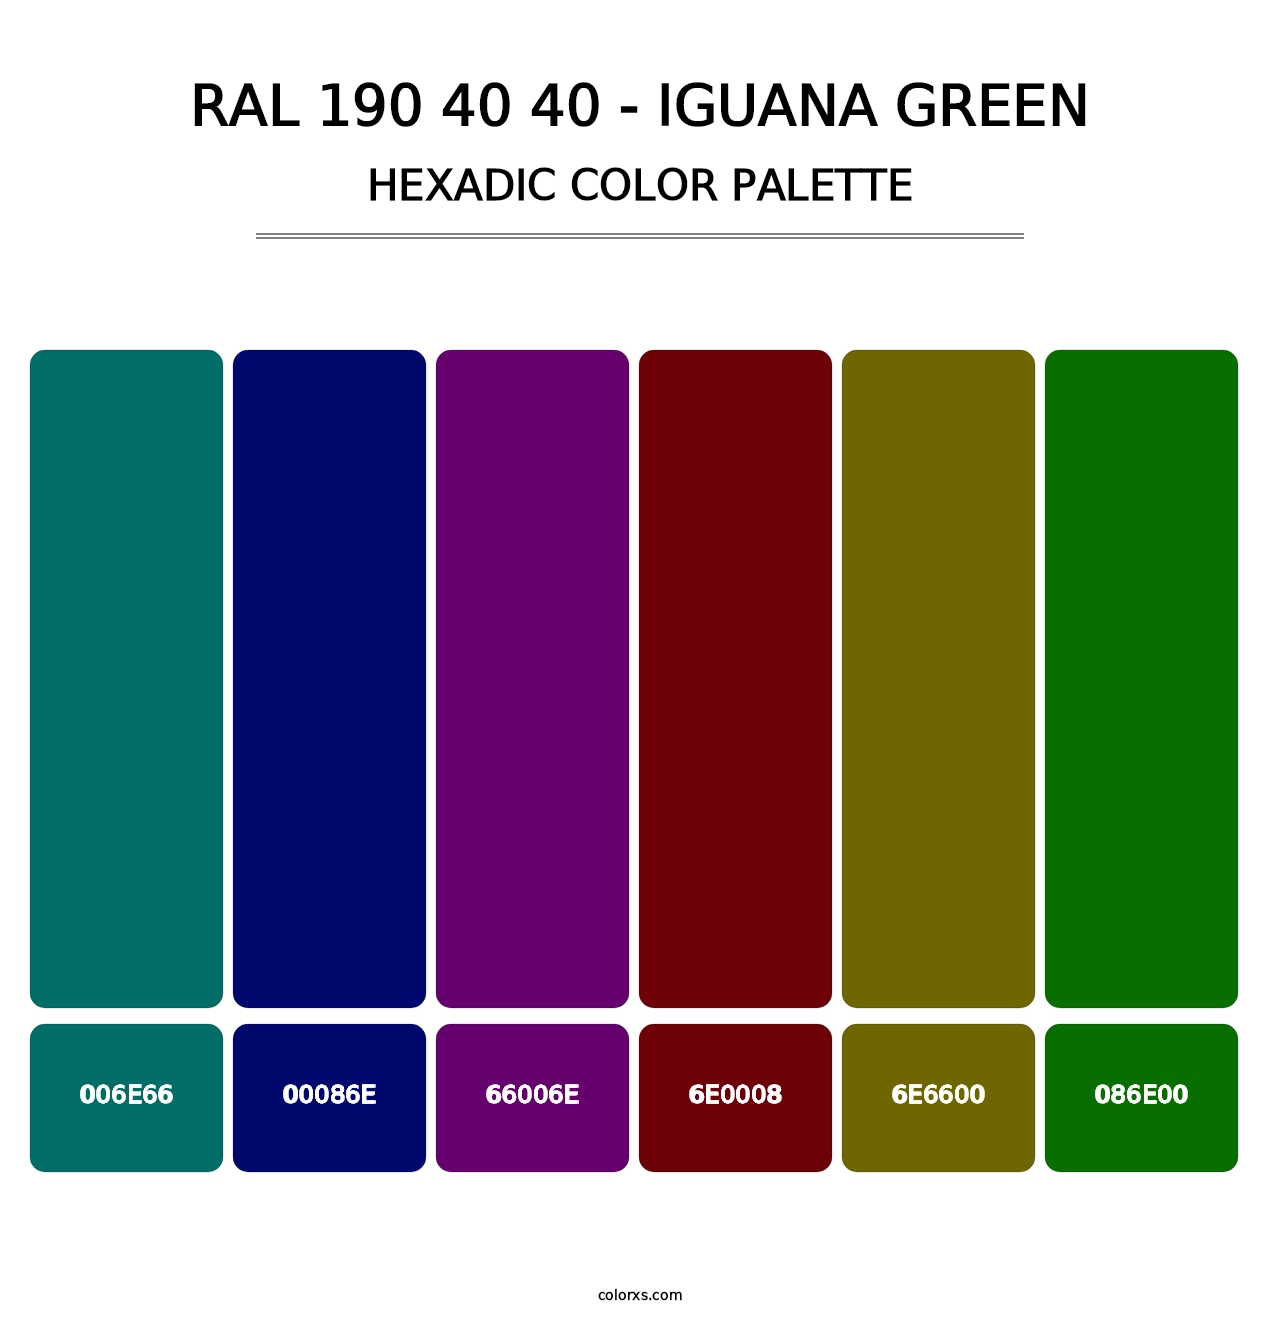 RAL 190 40 40 - Iguana Green - Hexadic Color Palette